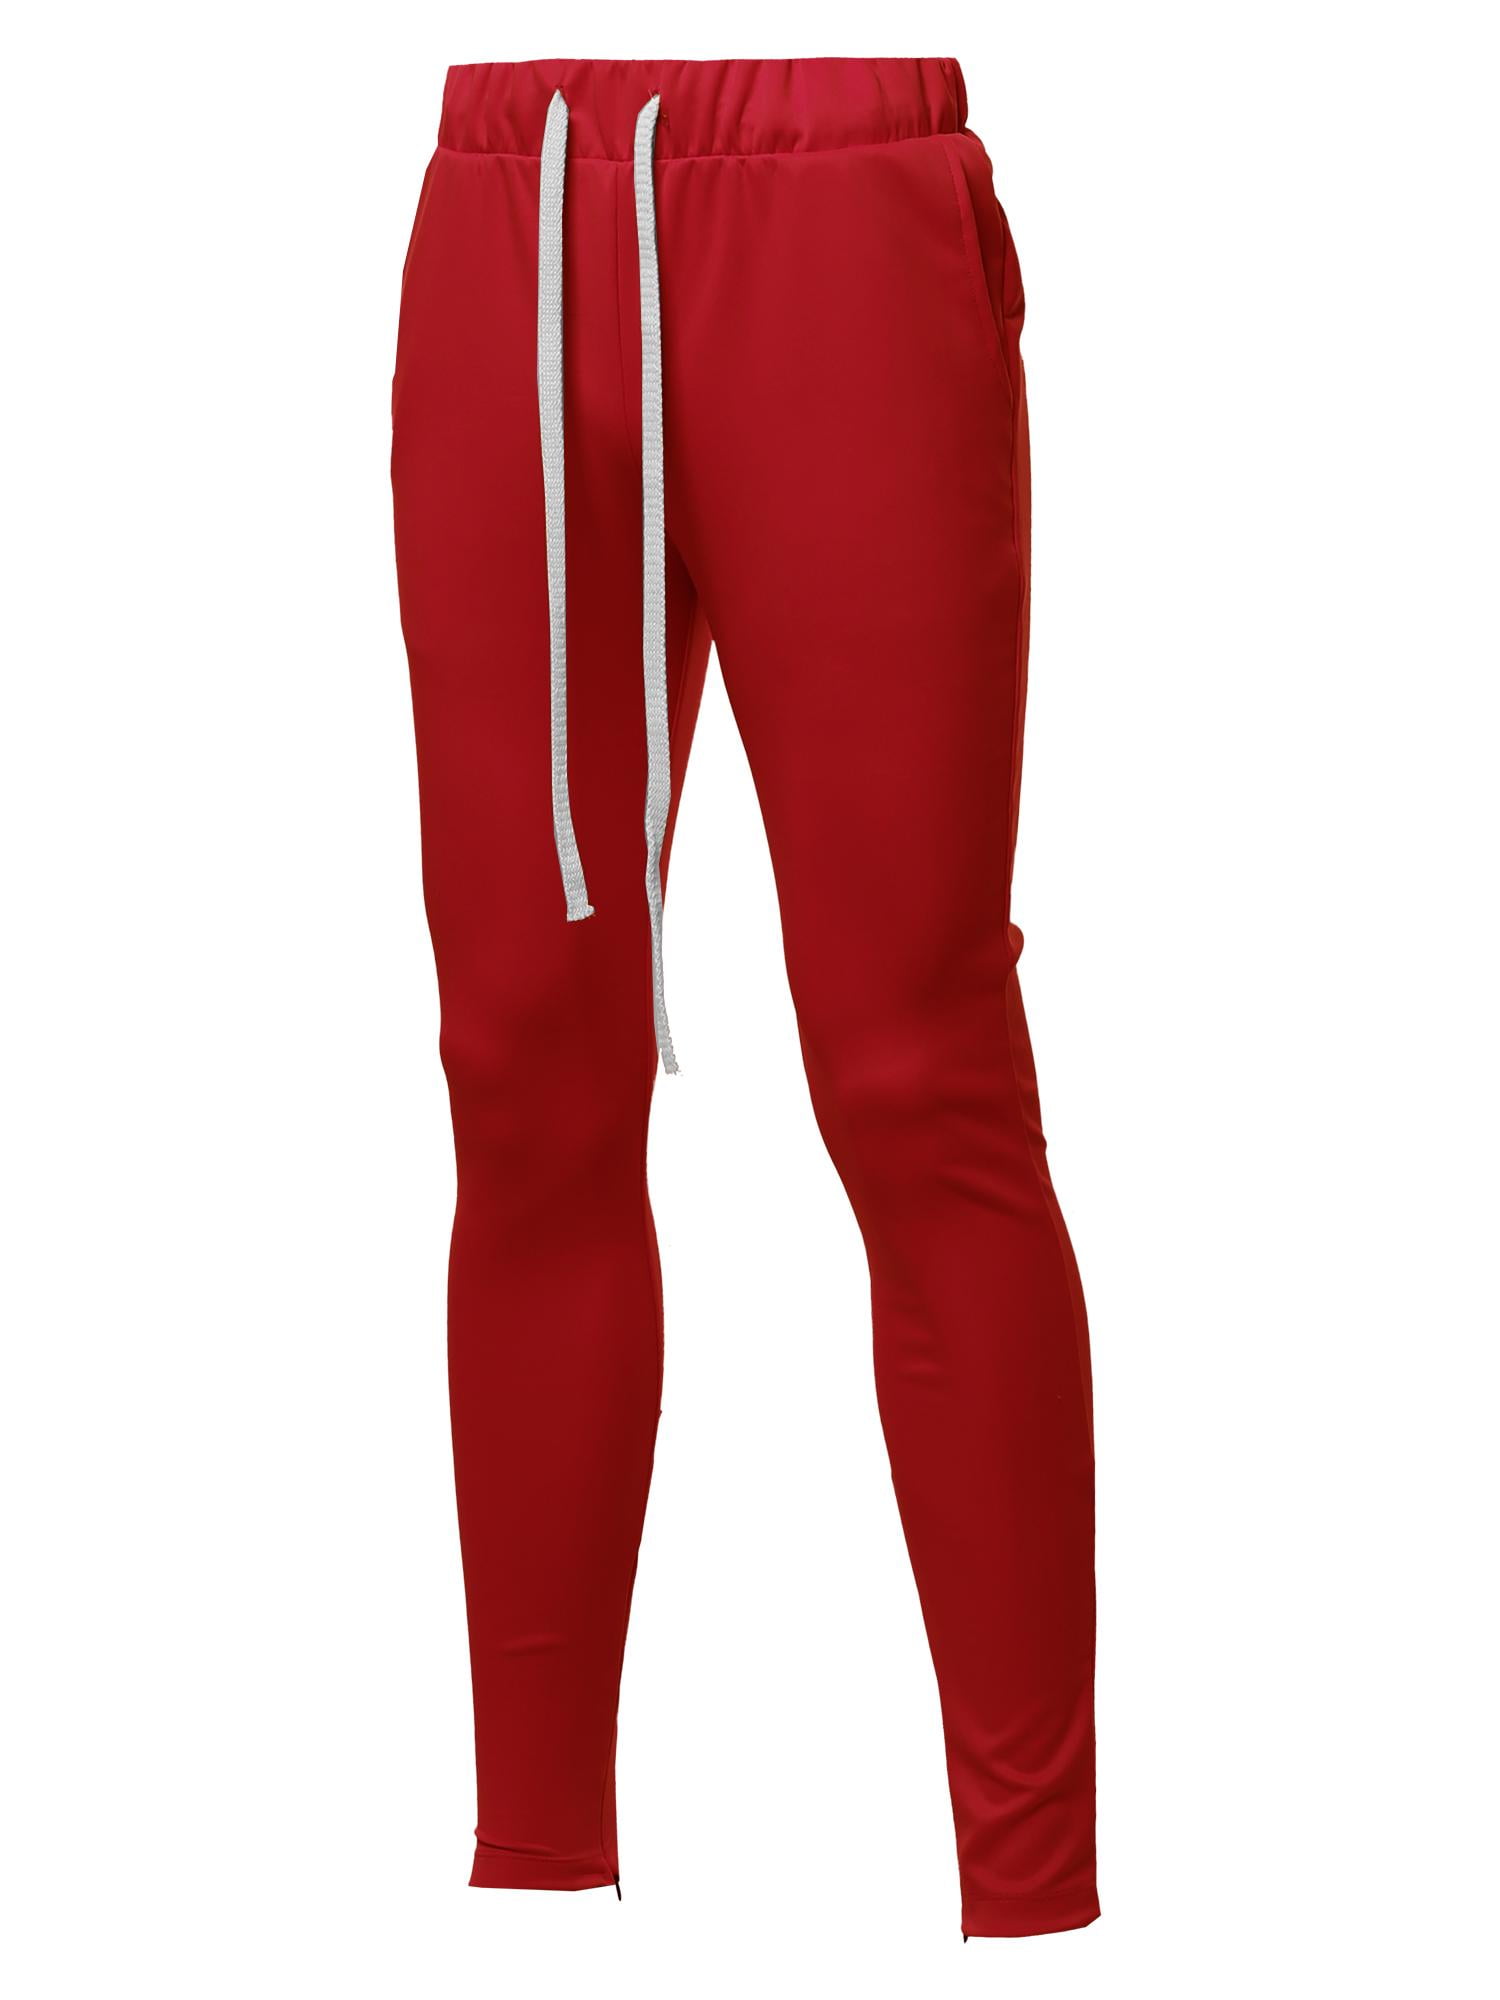 RYRJJ Mens Fashion Joggers Pants Cargo Hiking Pants Drawstring Sports Long  Sweatpants Workout Track Pants for Gym Training(Black,XL) - Walmart.com